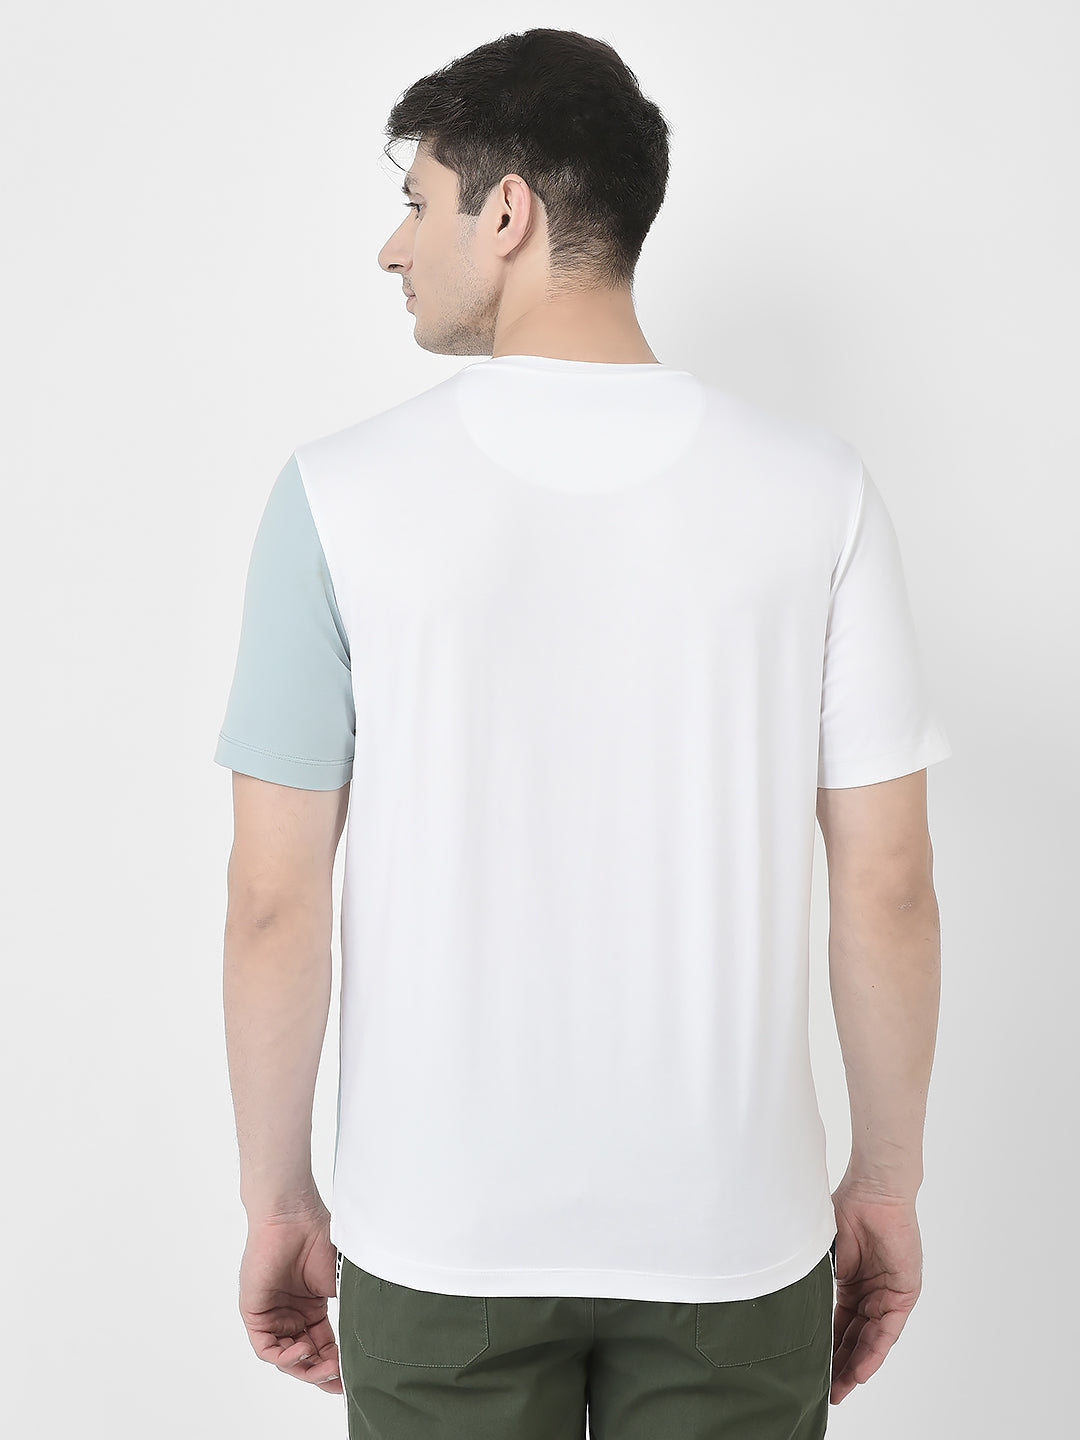  Blue Typographic Tank T-Shirt